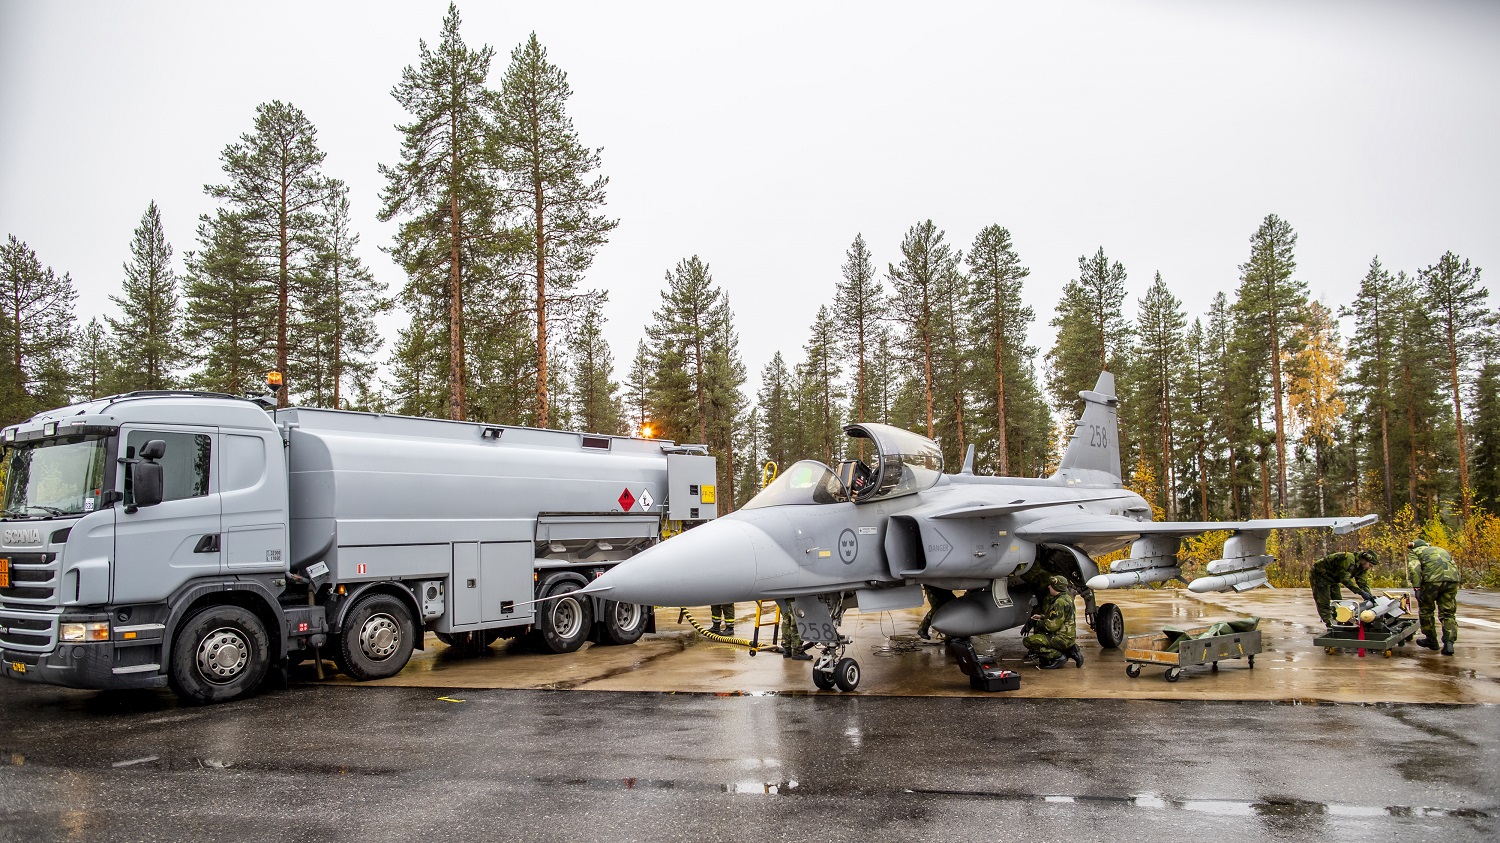 Swedish Air Force Jas 39 Gripen fighter aircraft